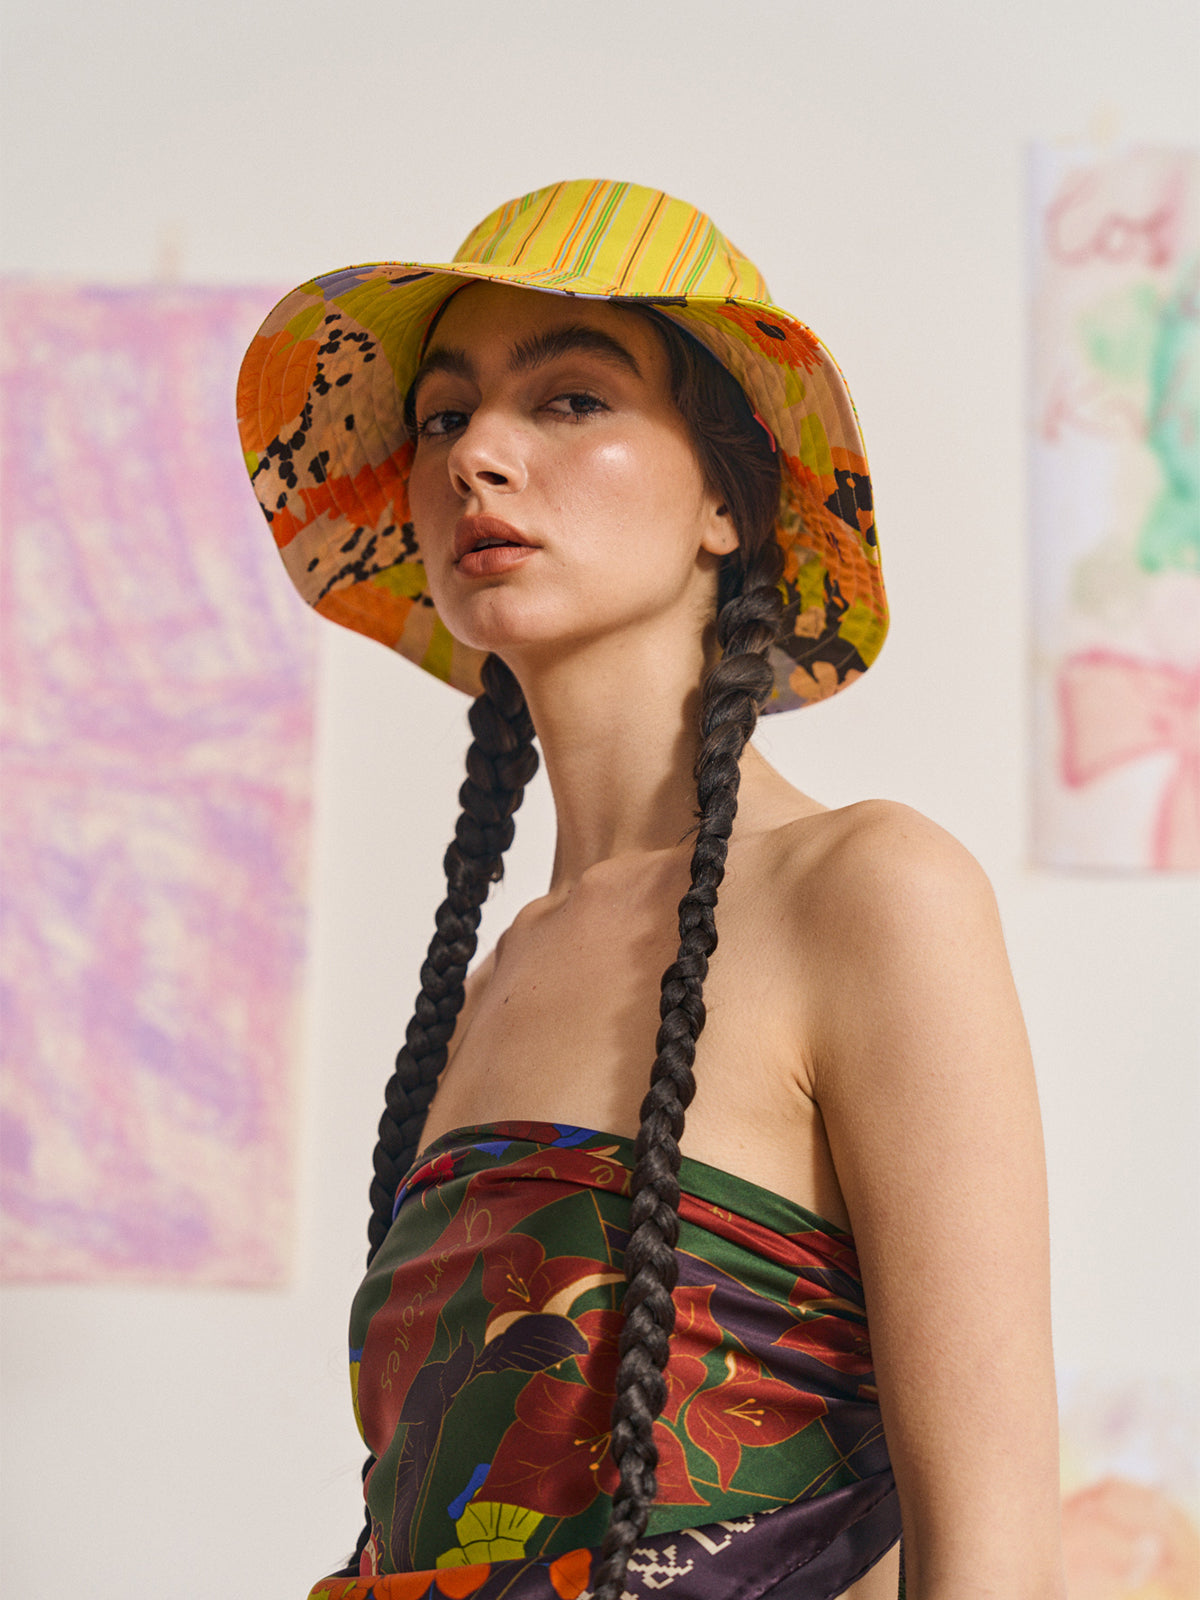 FRIDA x LOST PATTERN "Frida's Garden" Cotton Reversible Sun Hat - Purple & Yellow - LOST PATTERN Hats